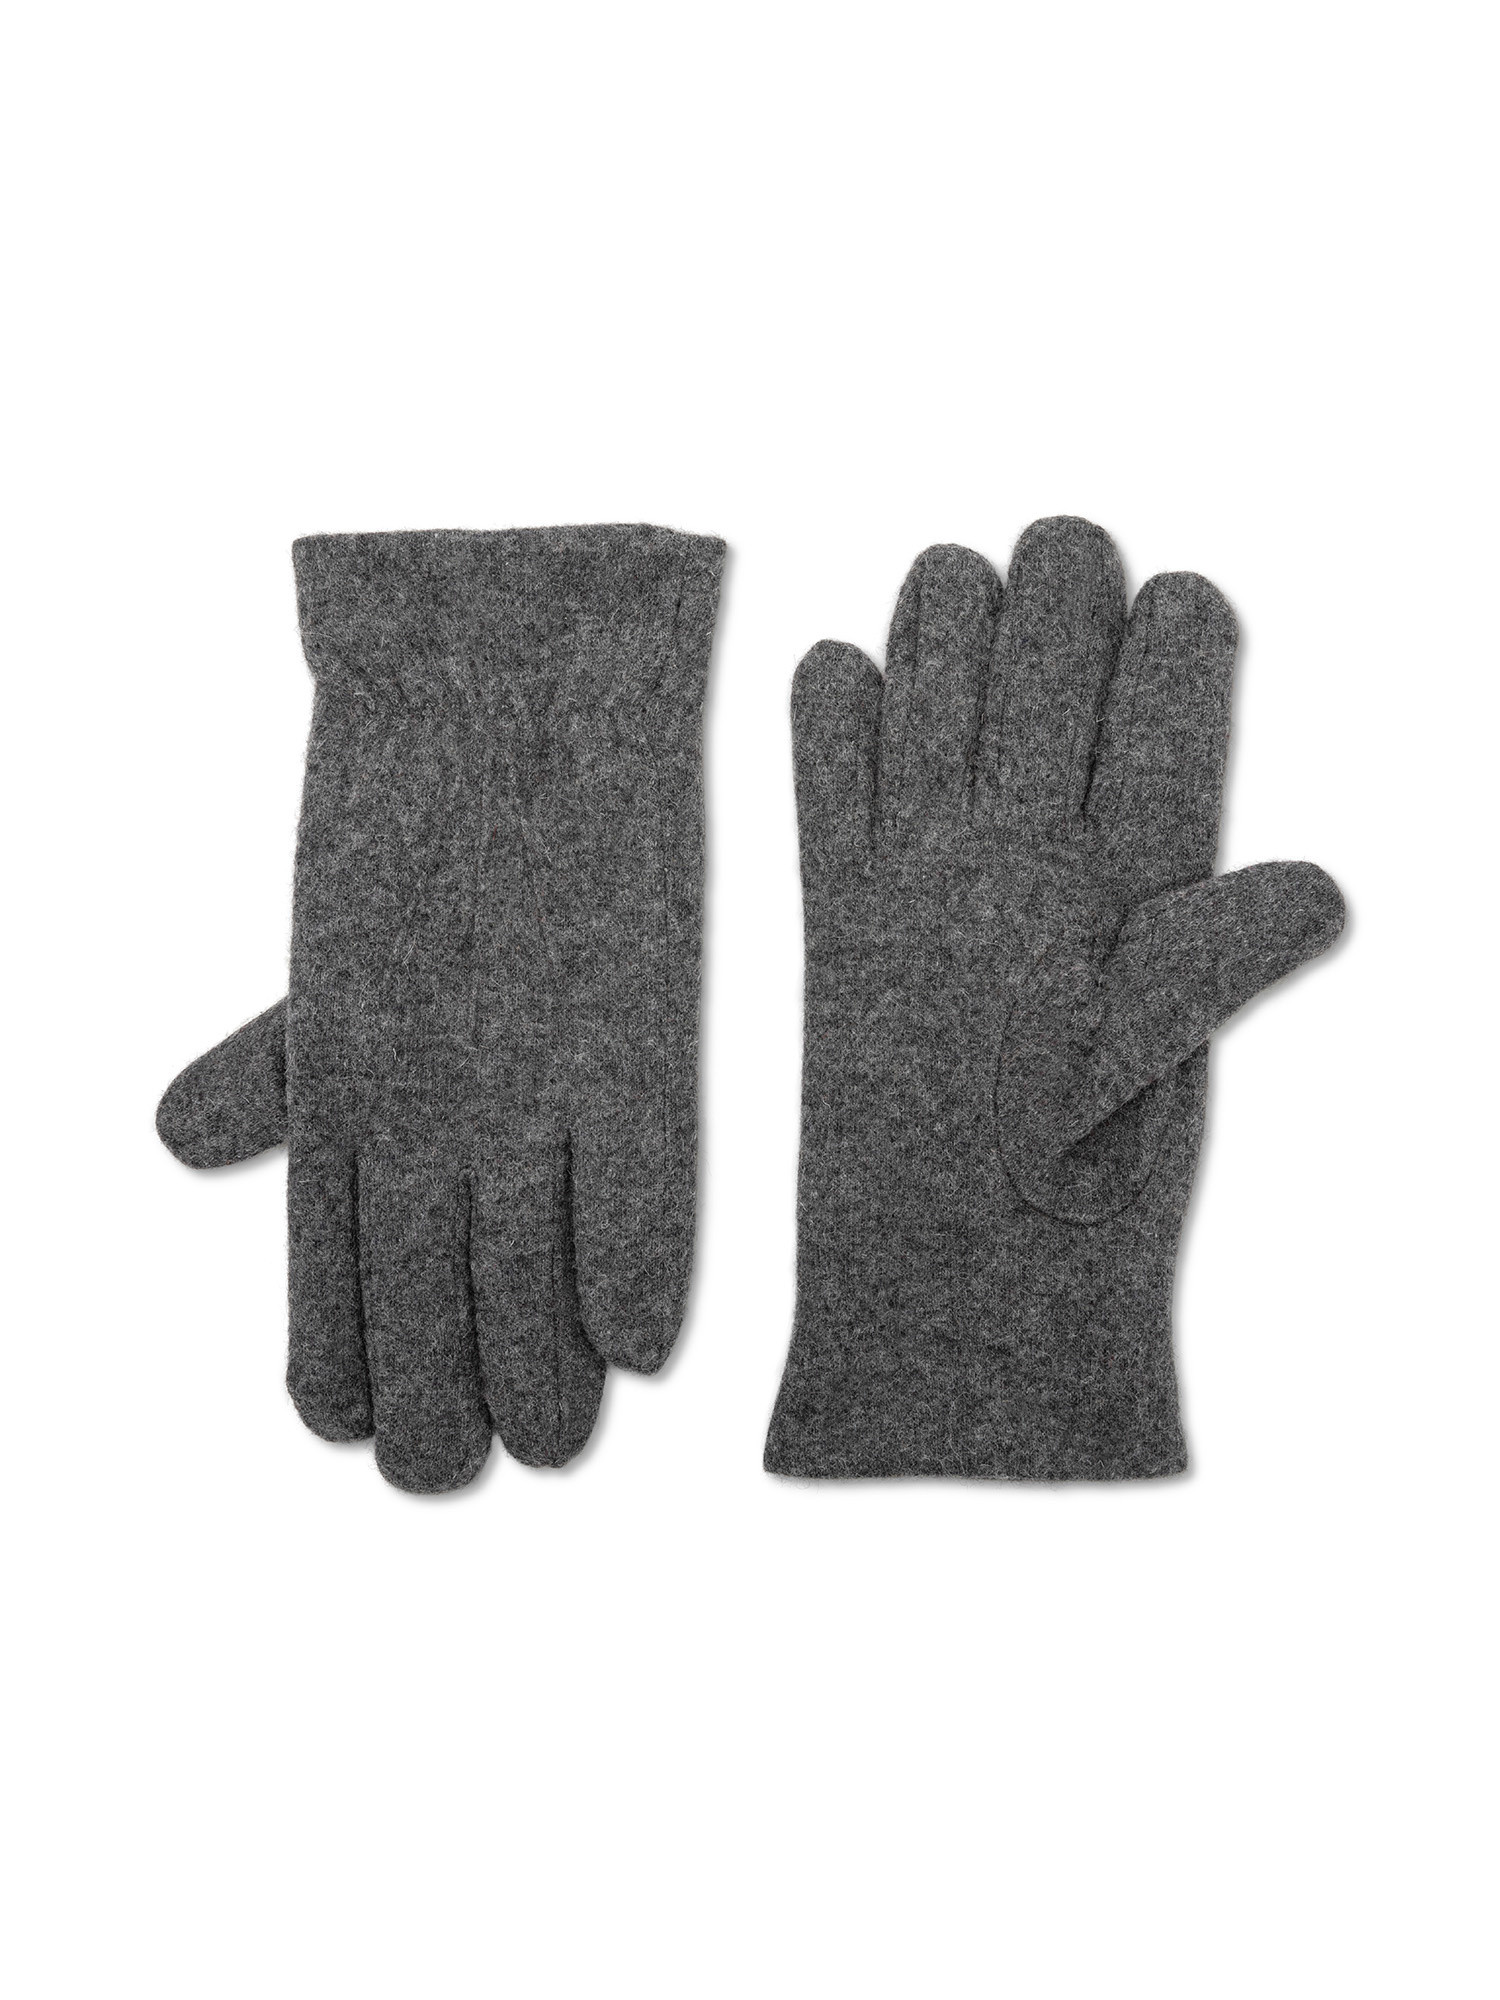 Luca D'Altieri - Wool blend cloth gloves, Grey, large image number 0